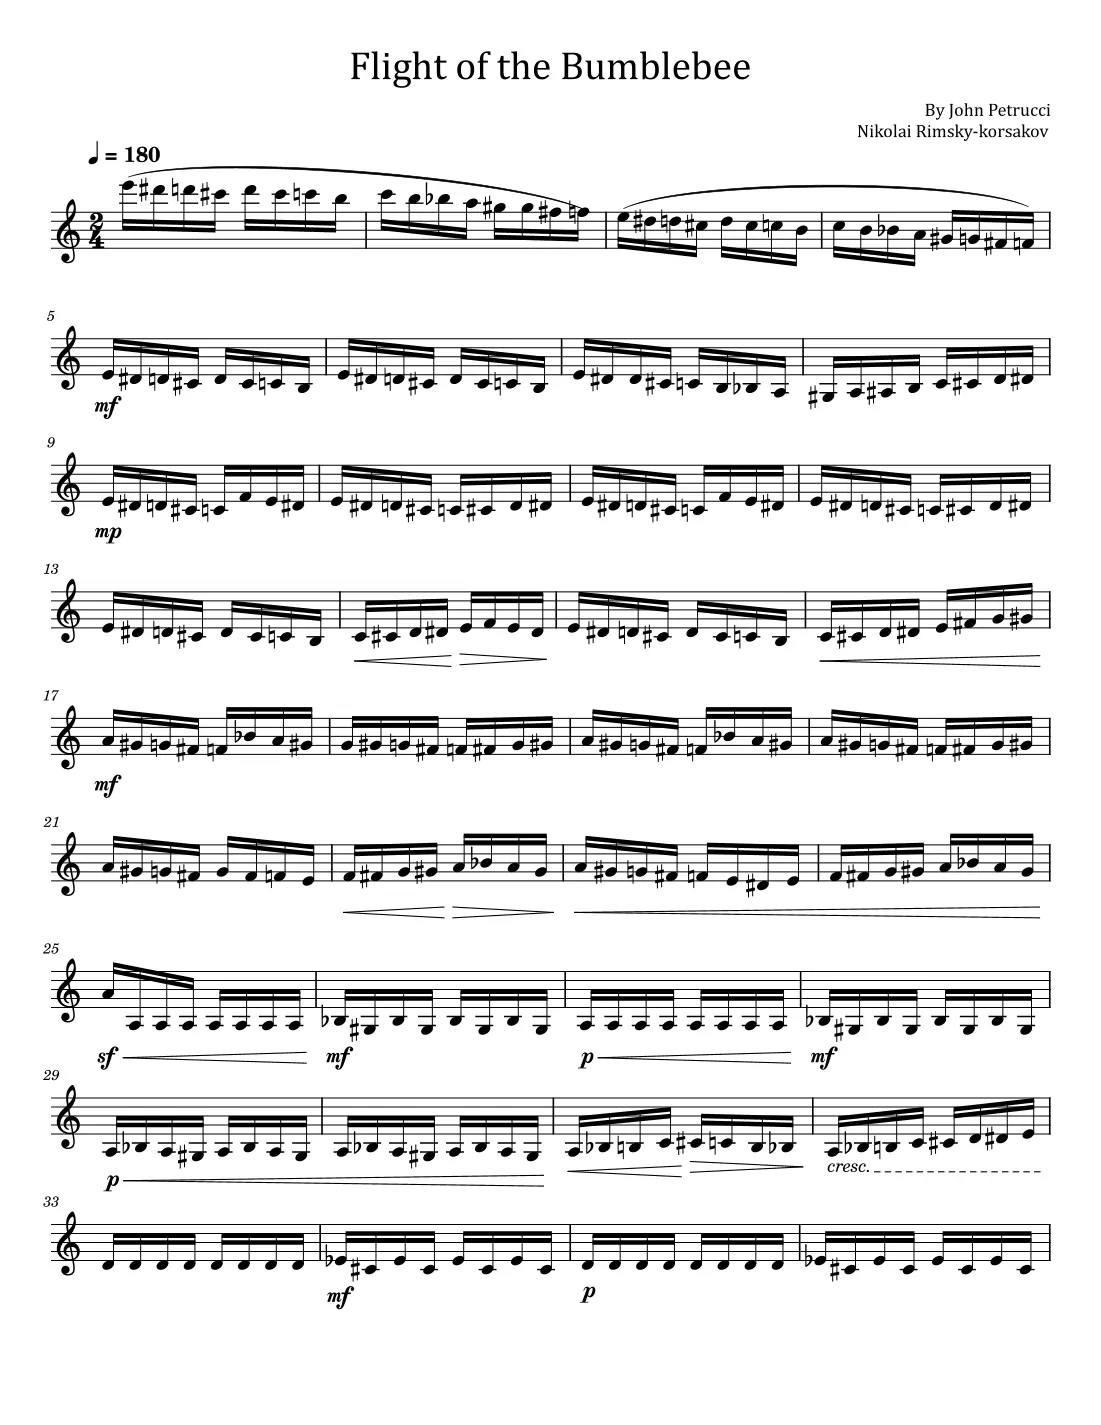 flight of the bumblebee violin sheet - Is Flight of the Bumblebee piano or violin